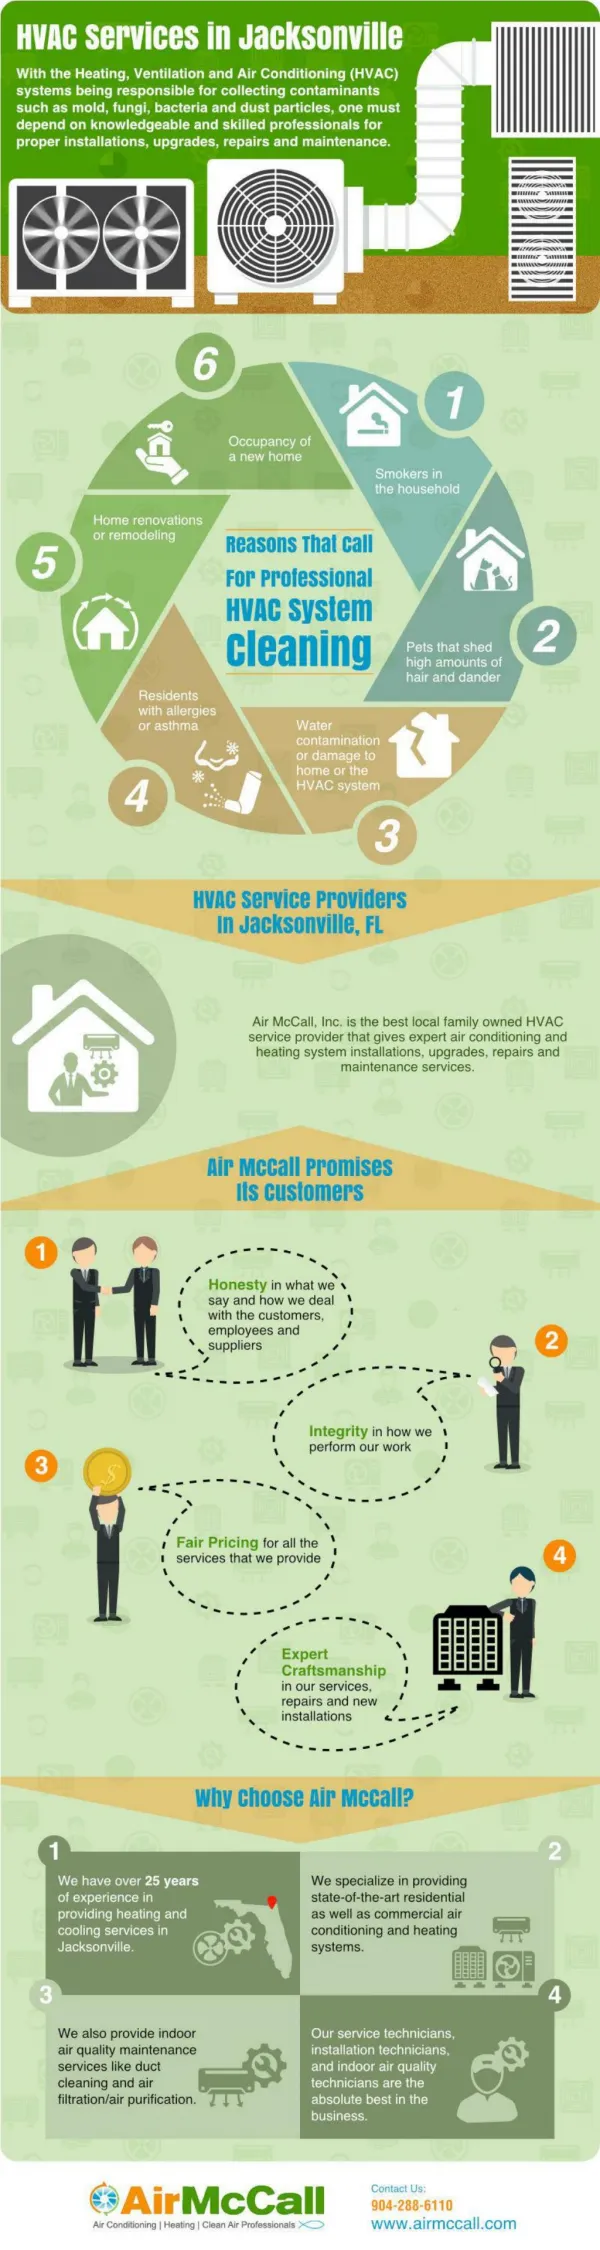 HVAC Installation & Repair Services in Jacksonville, FL (904-288-6110)